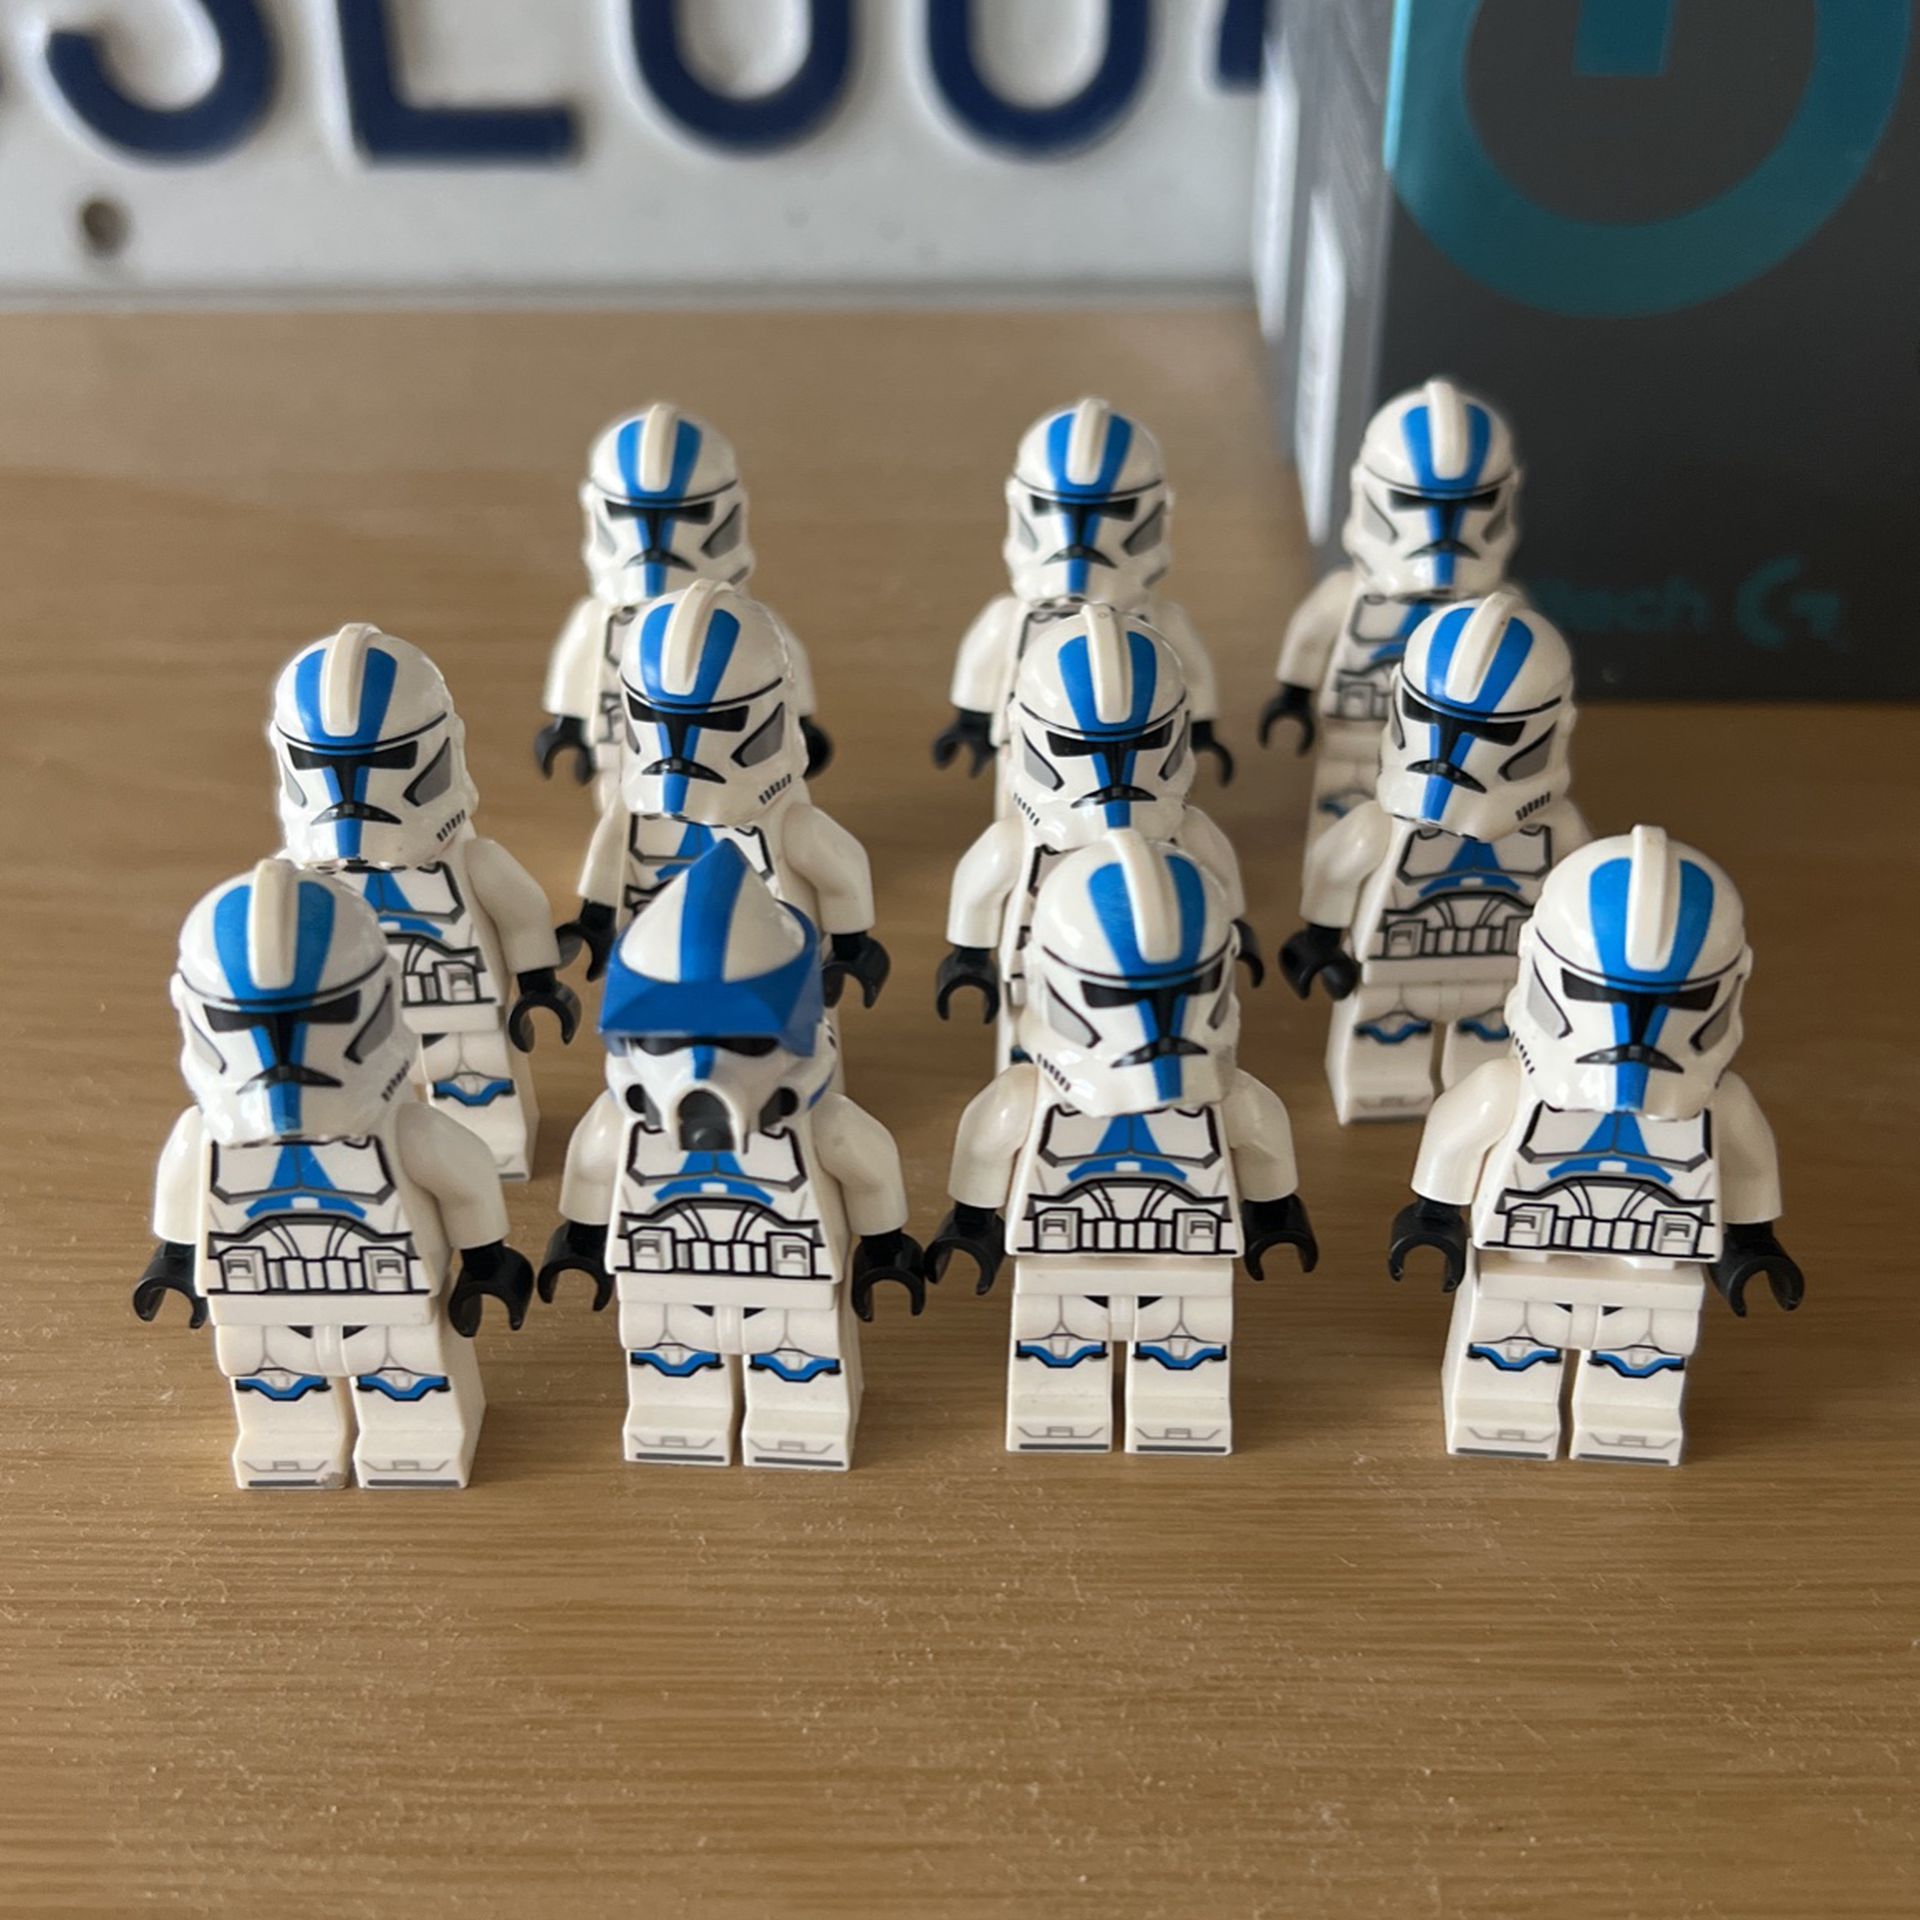 Lego Star Wars Clones Shoot Me An Offer 